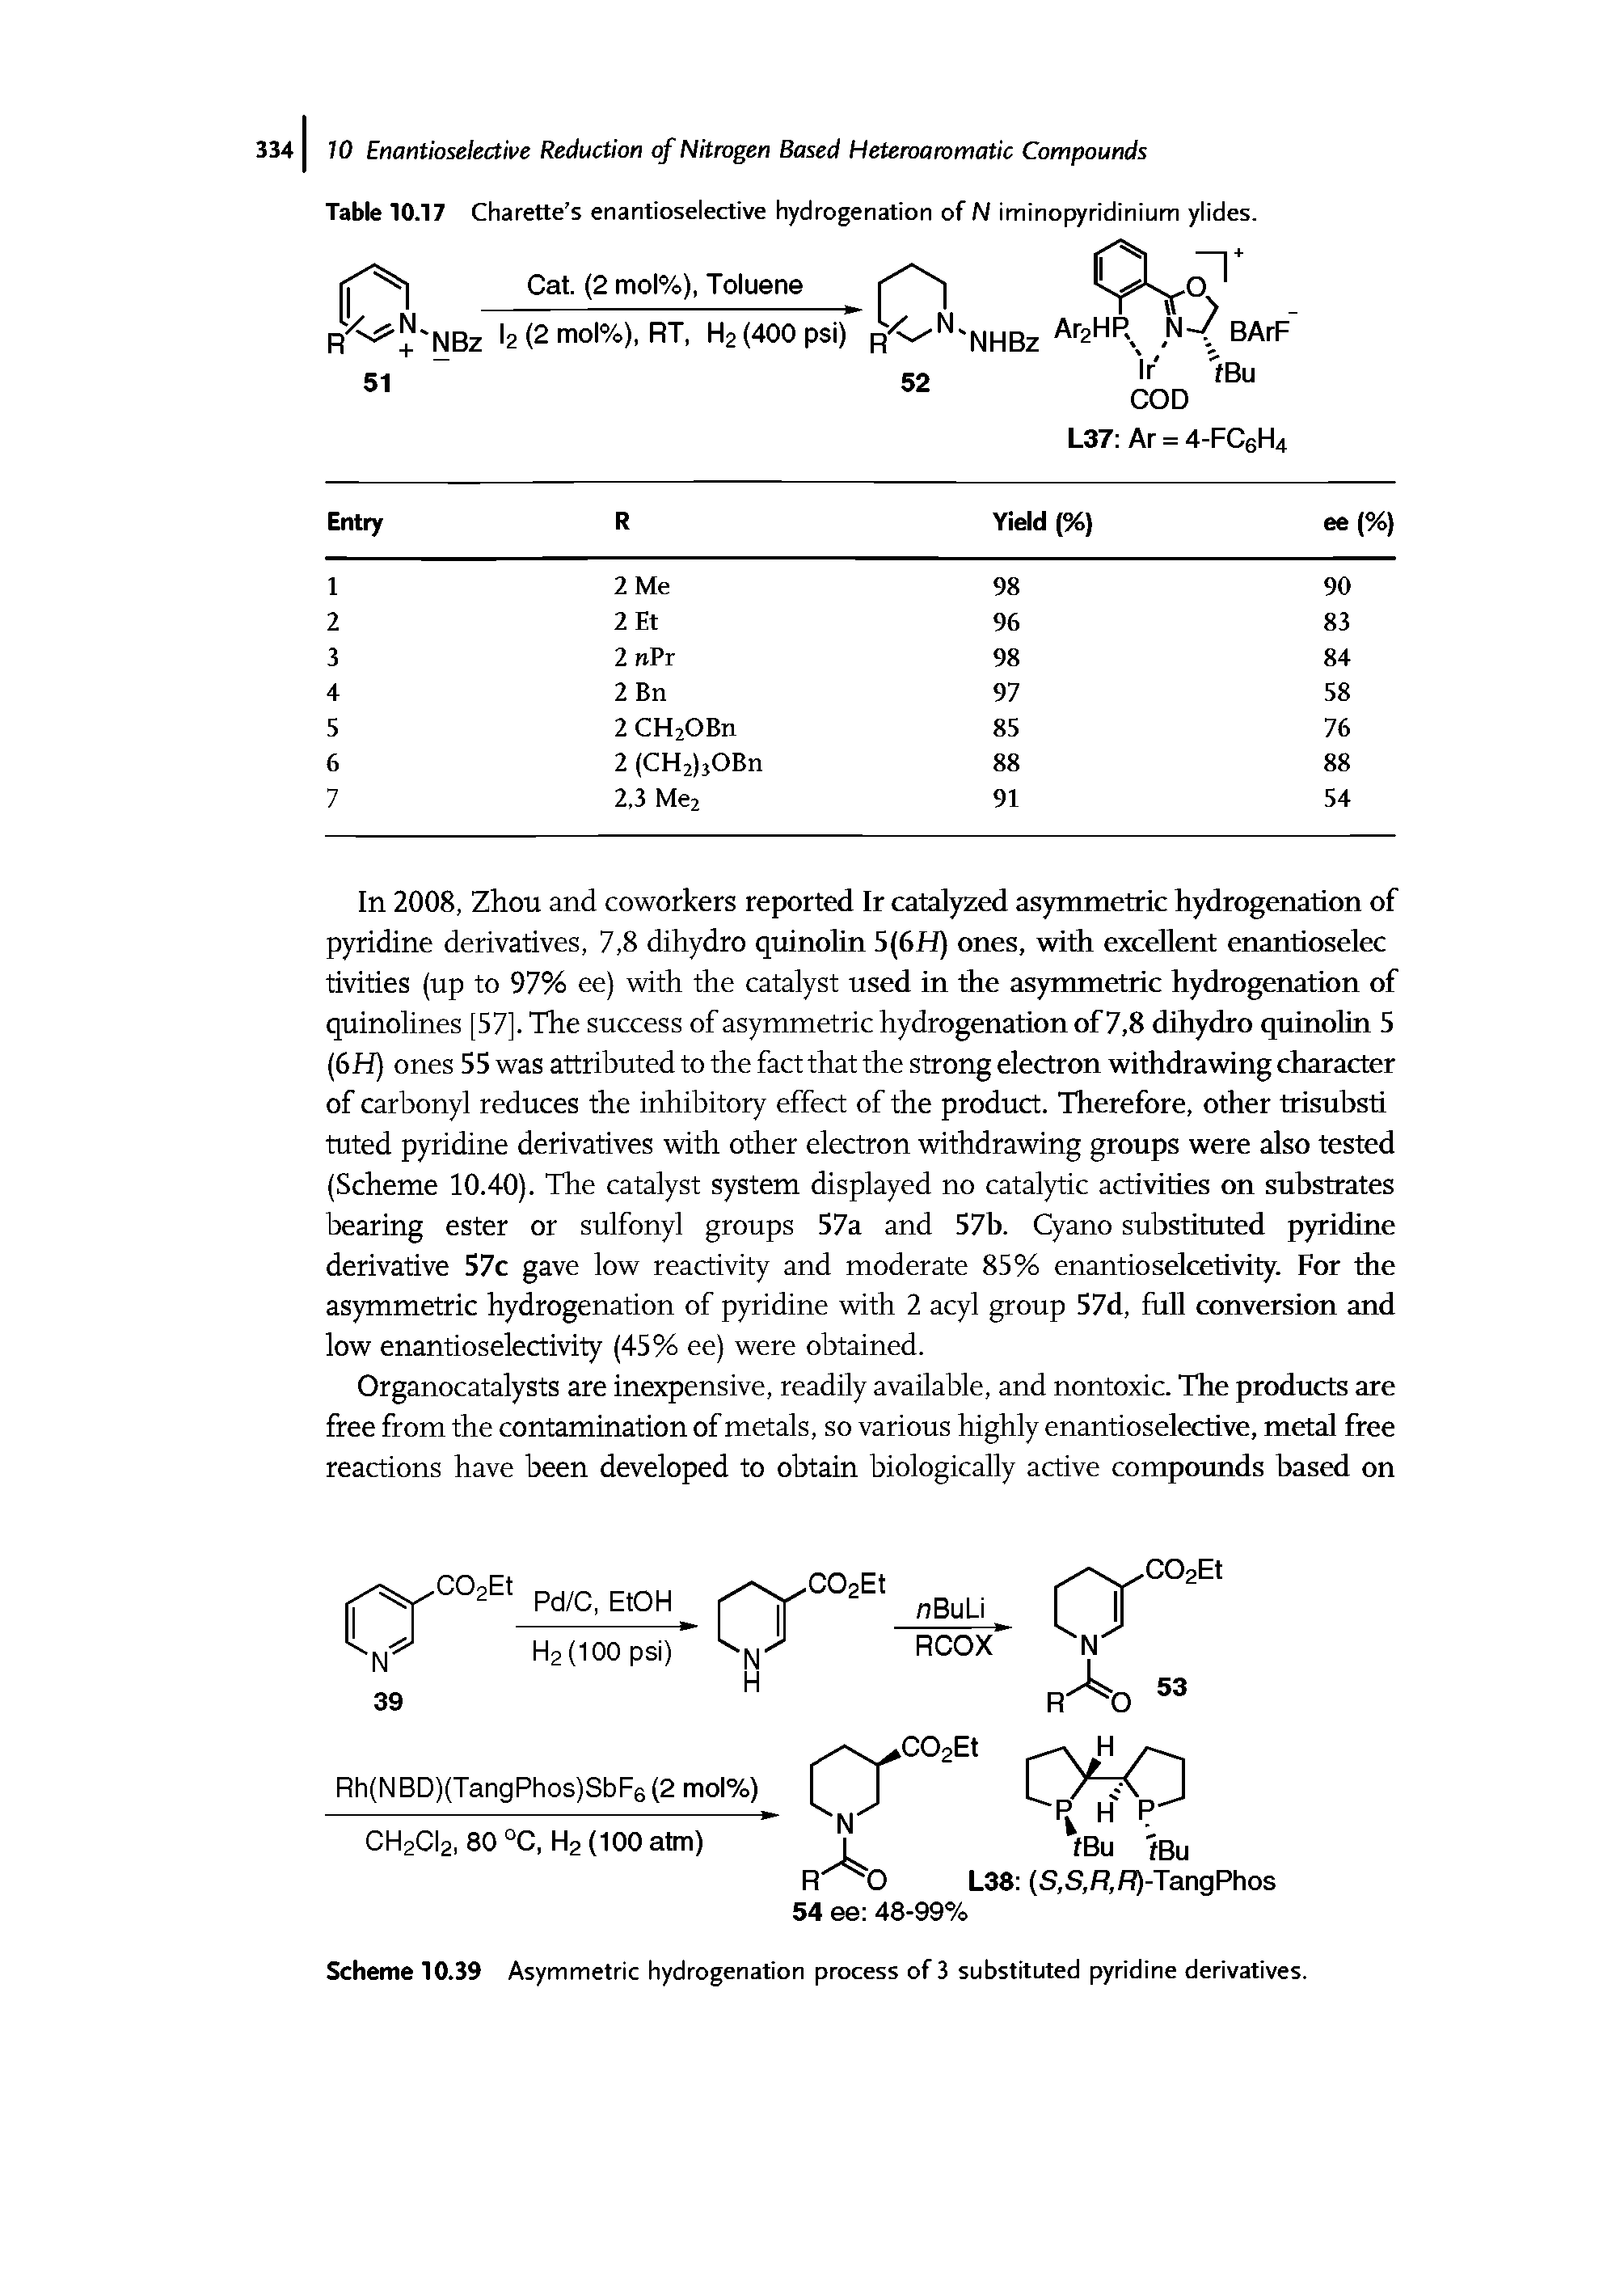 Scheme 10.39 Asymmetric hydrogenation process of 3 substituted pyridine derivatives.